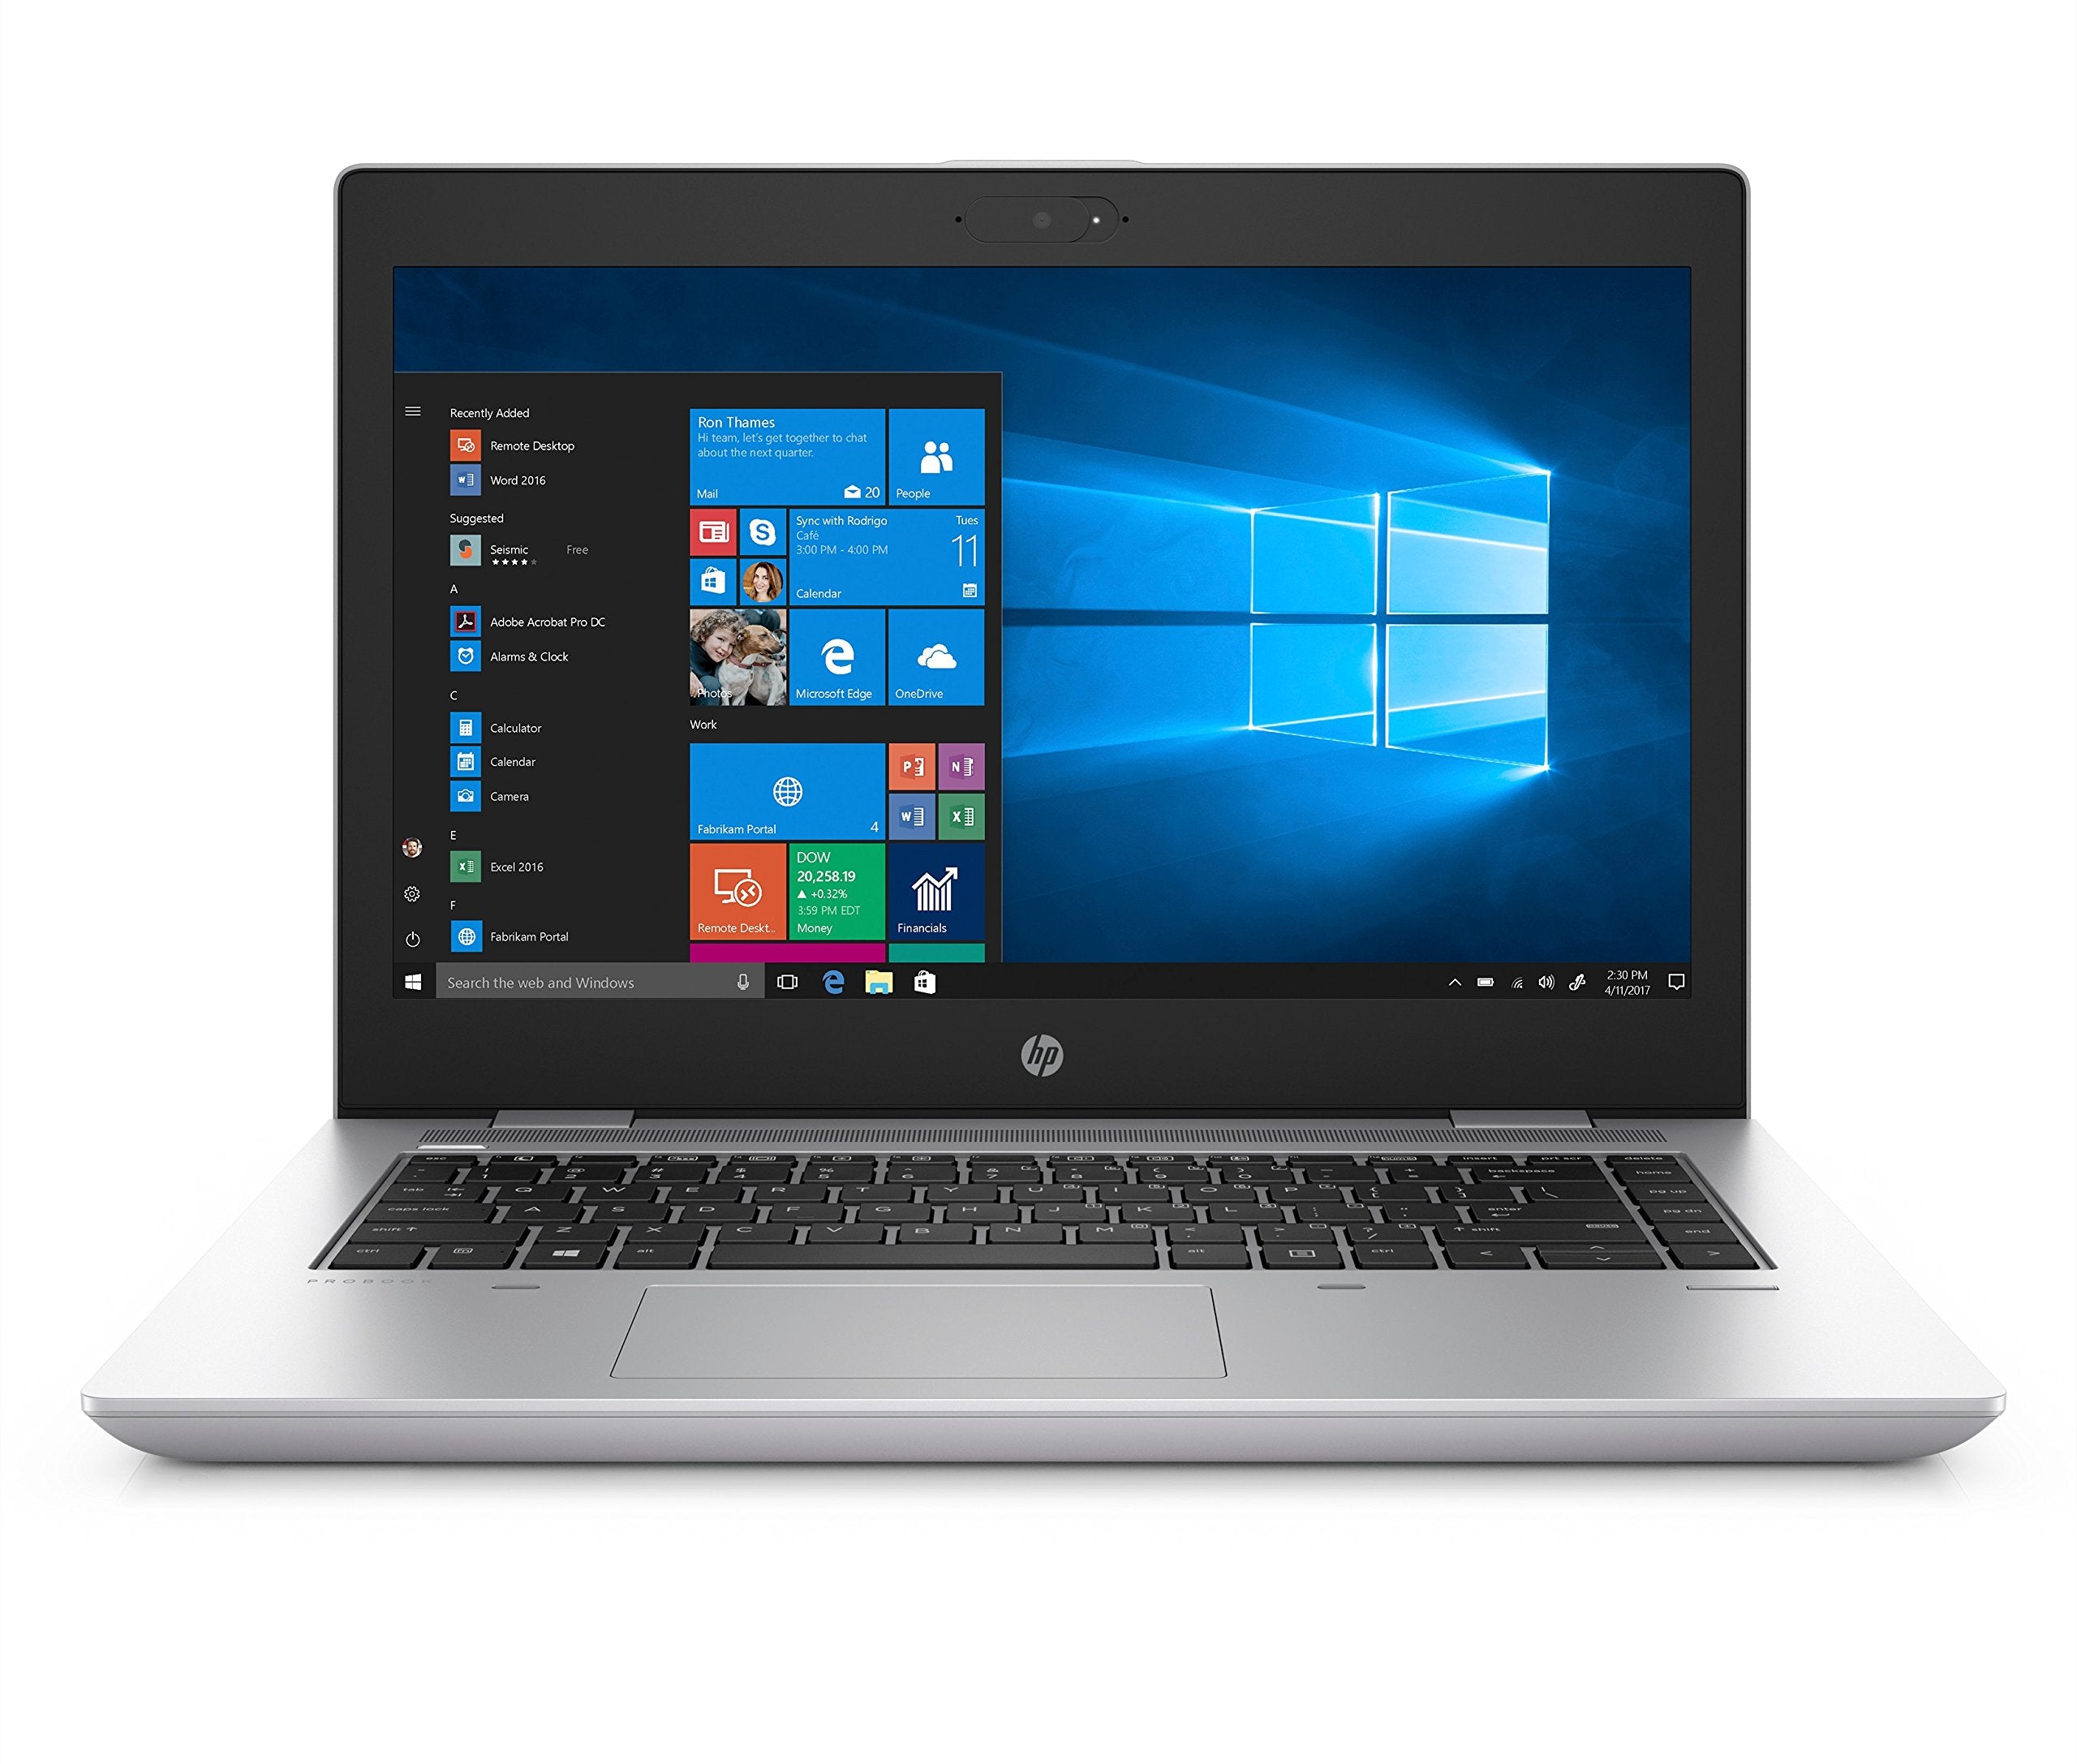 HP ProBook 640 G4 (14 inch) Notebook PC Core i5 (8250U) 1.6GHz 8GB 256GB SSD WLAN LTE BT Webcam Windows 10 Pro (UHD Graphics 620) (Certified Refurbished)